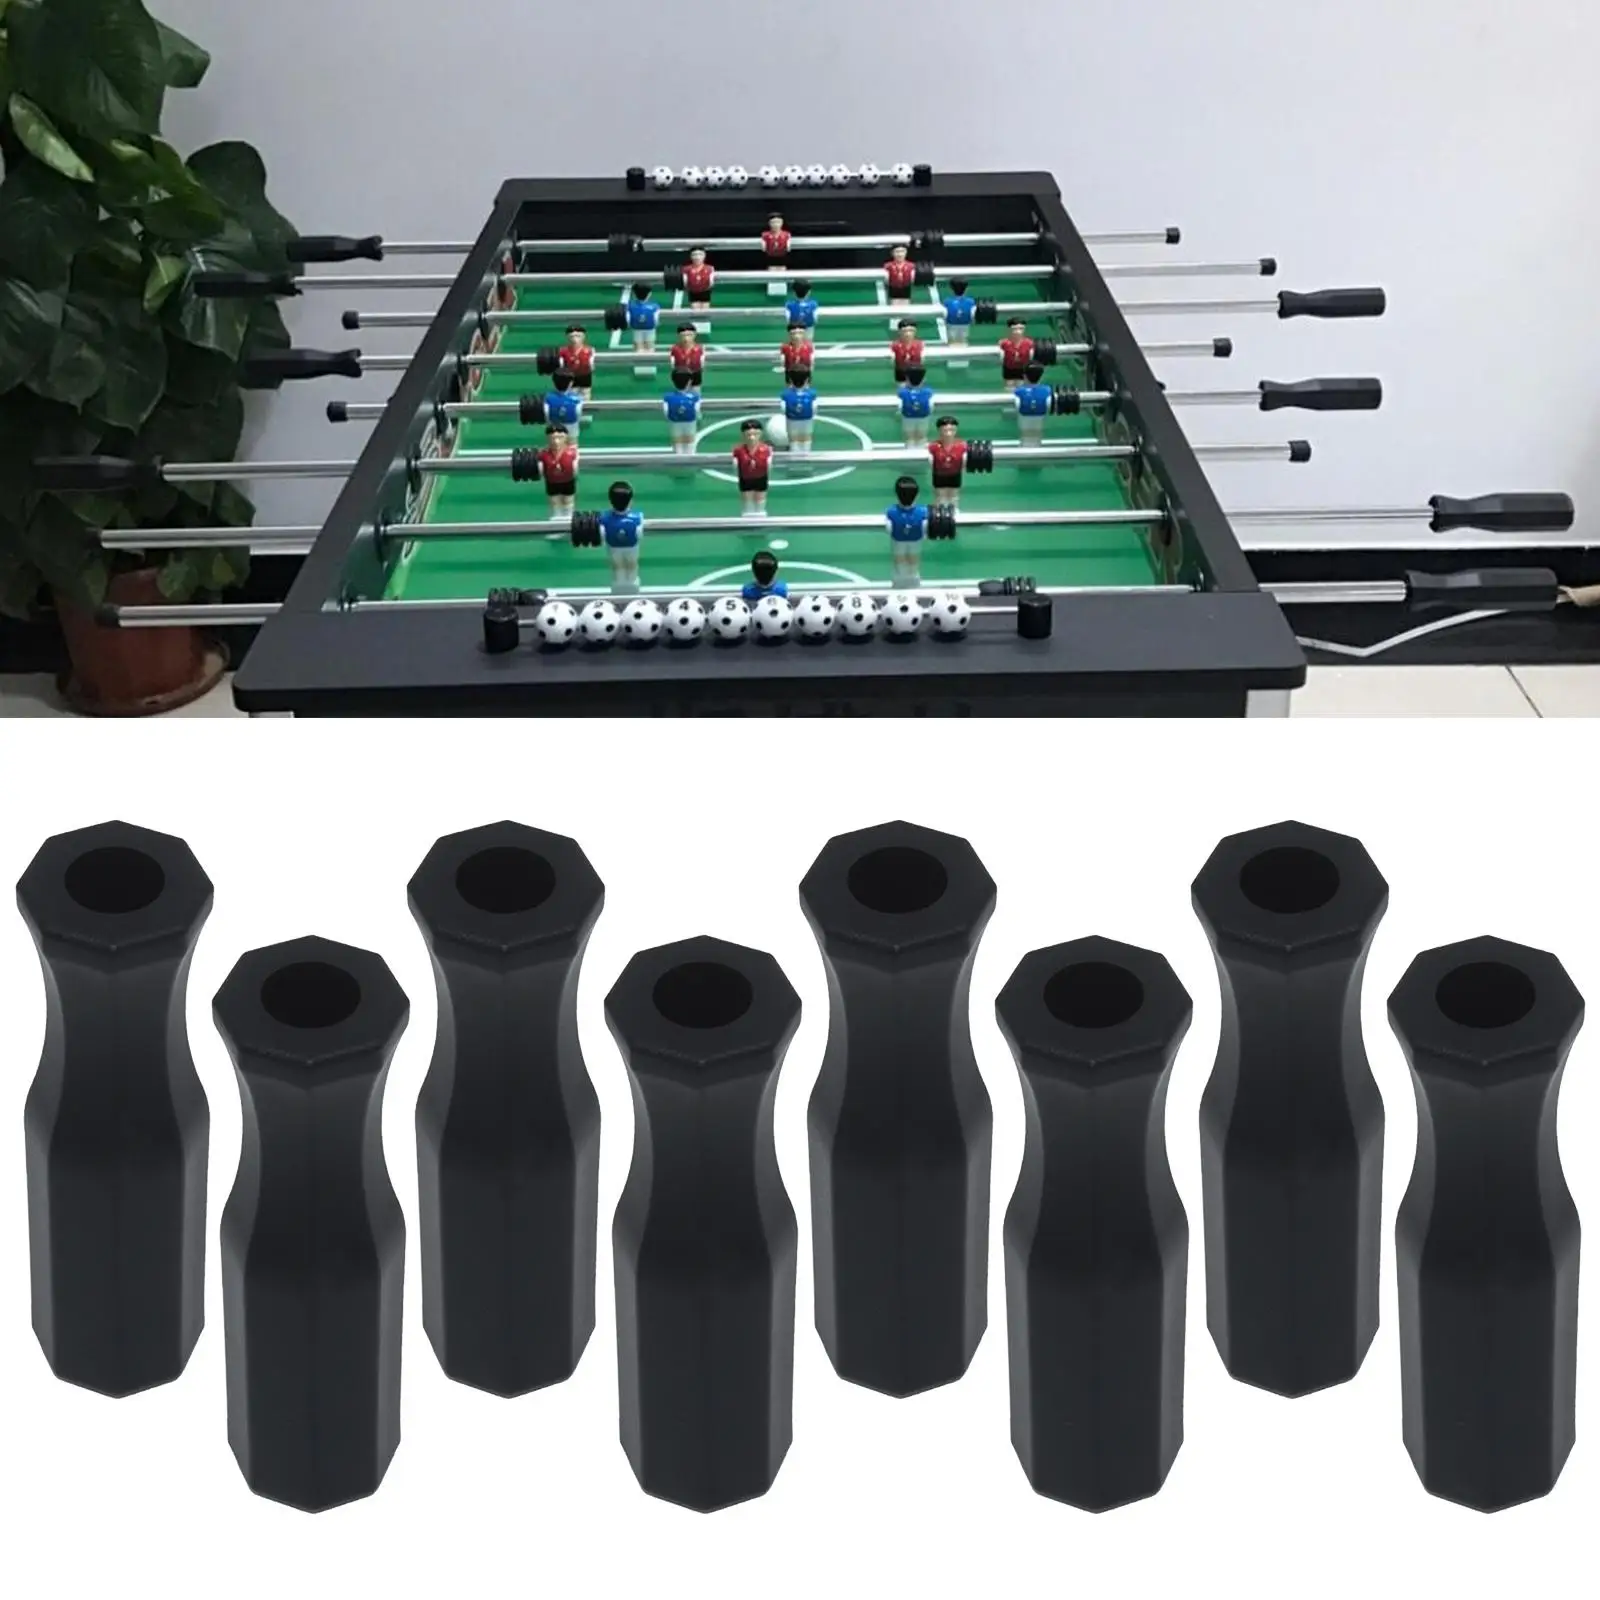 8Pcs Foosball Handle Grips for Standard Foosball Tables Soccer Table Handles